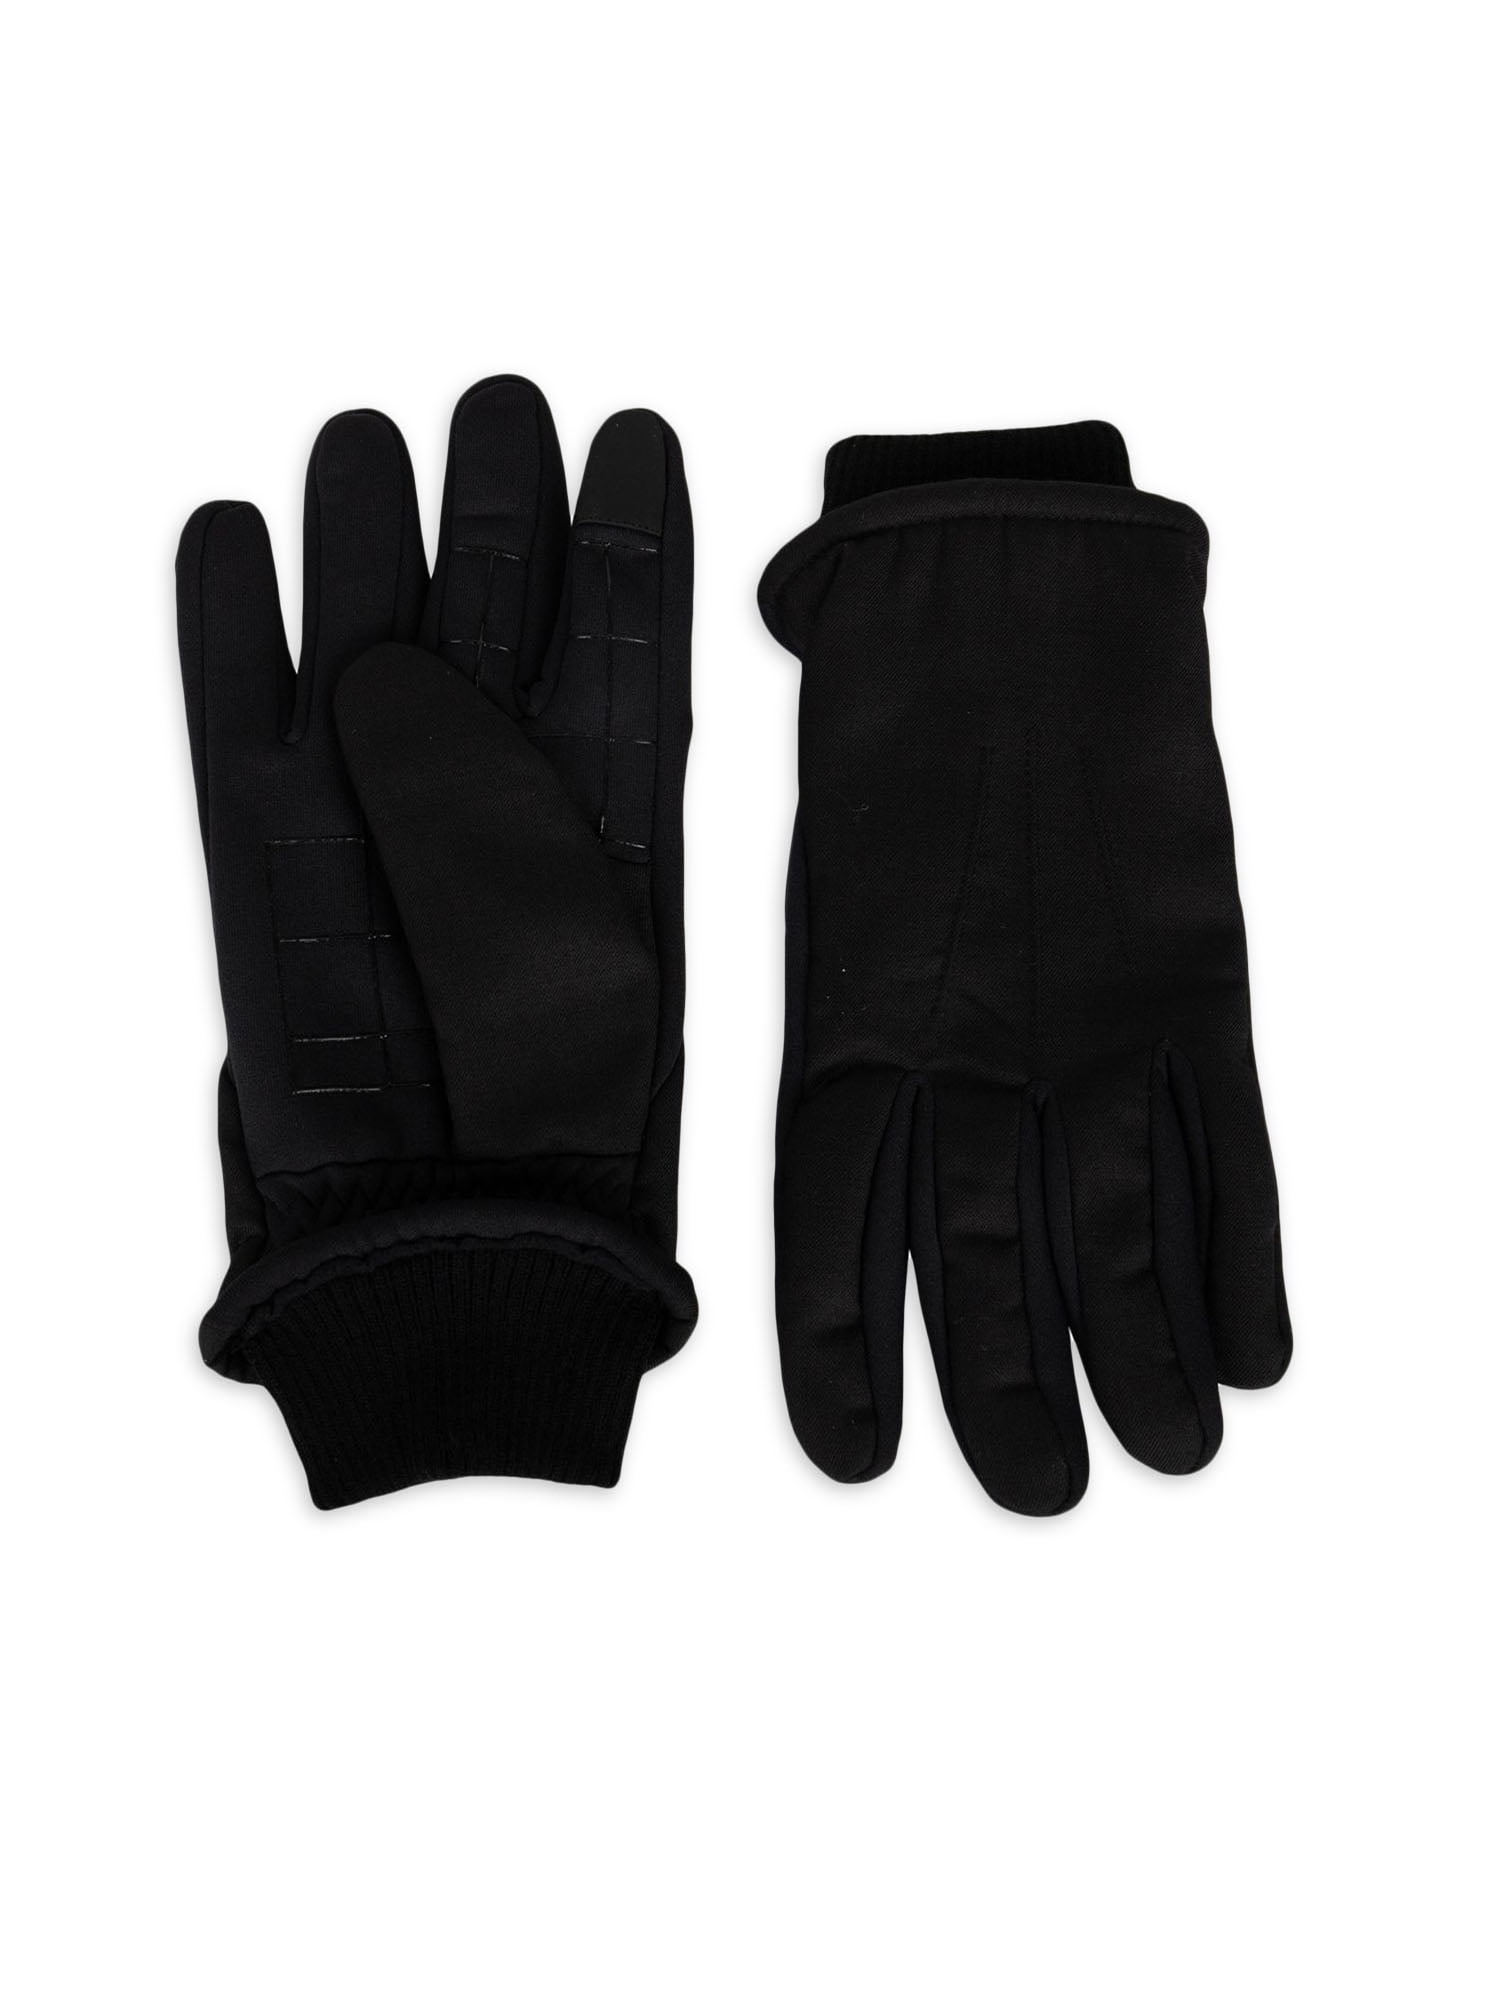 NEW Outdoor Designs Fuji Convertible Glove Black Fleece Gloves XL 